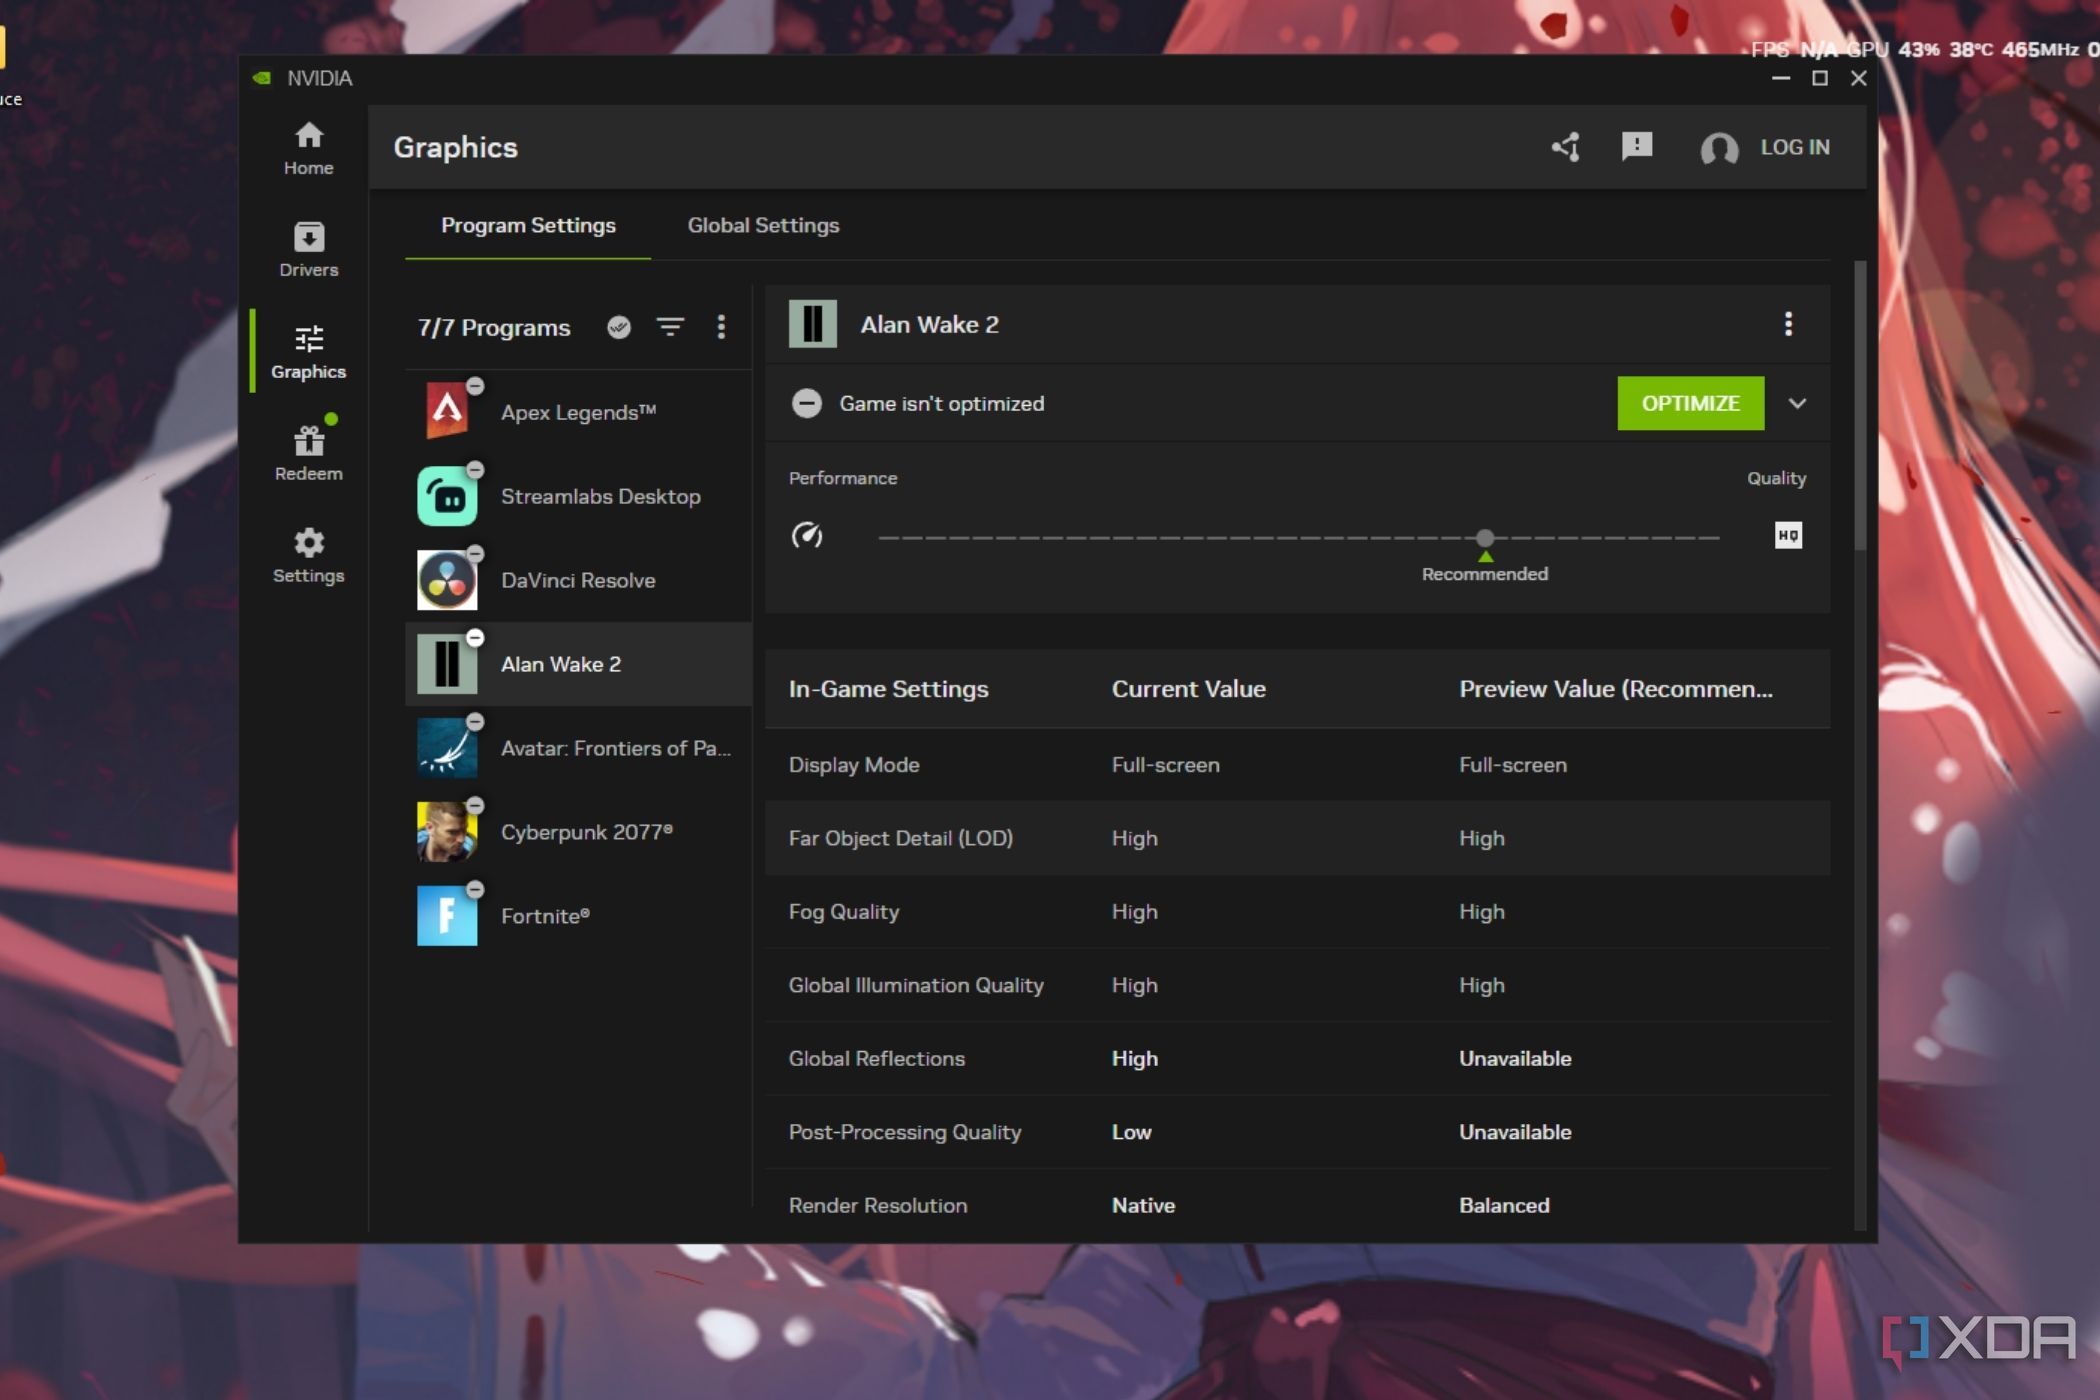 Tangkapan layar menunjukkan aplikasi Nvidia menampilkan pengaturan optimal untuk Alan Wake 2.